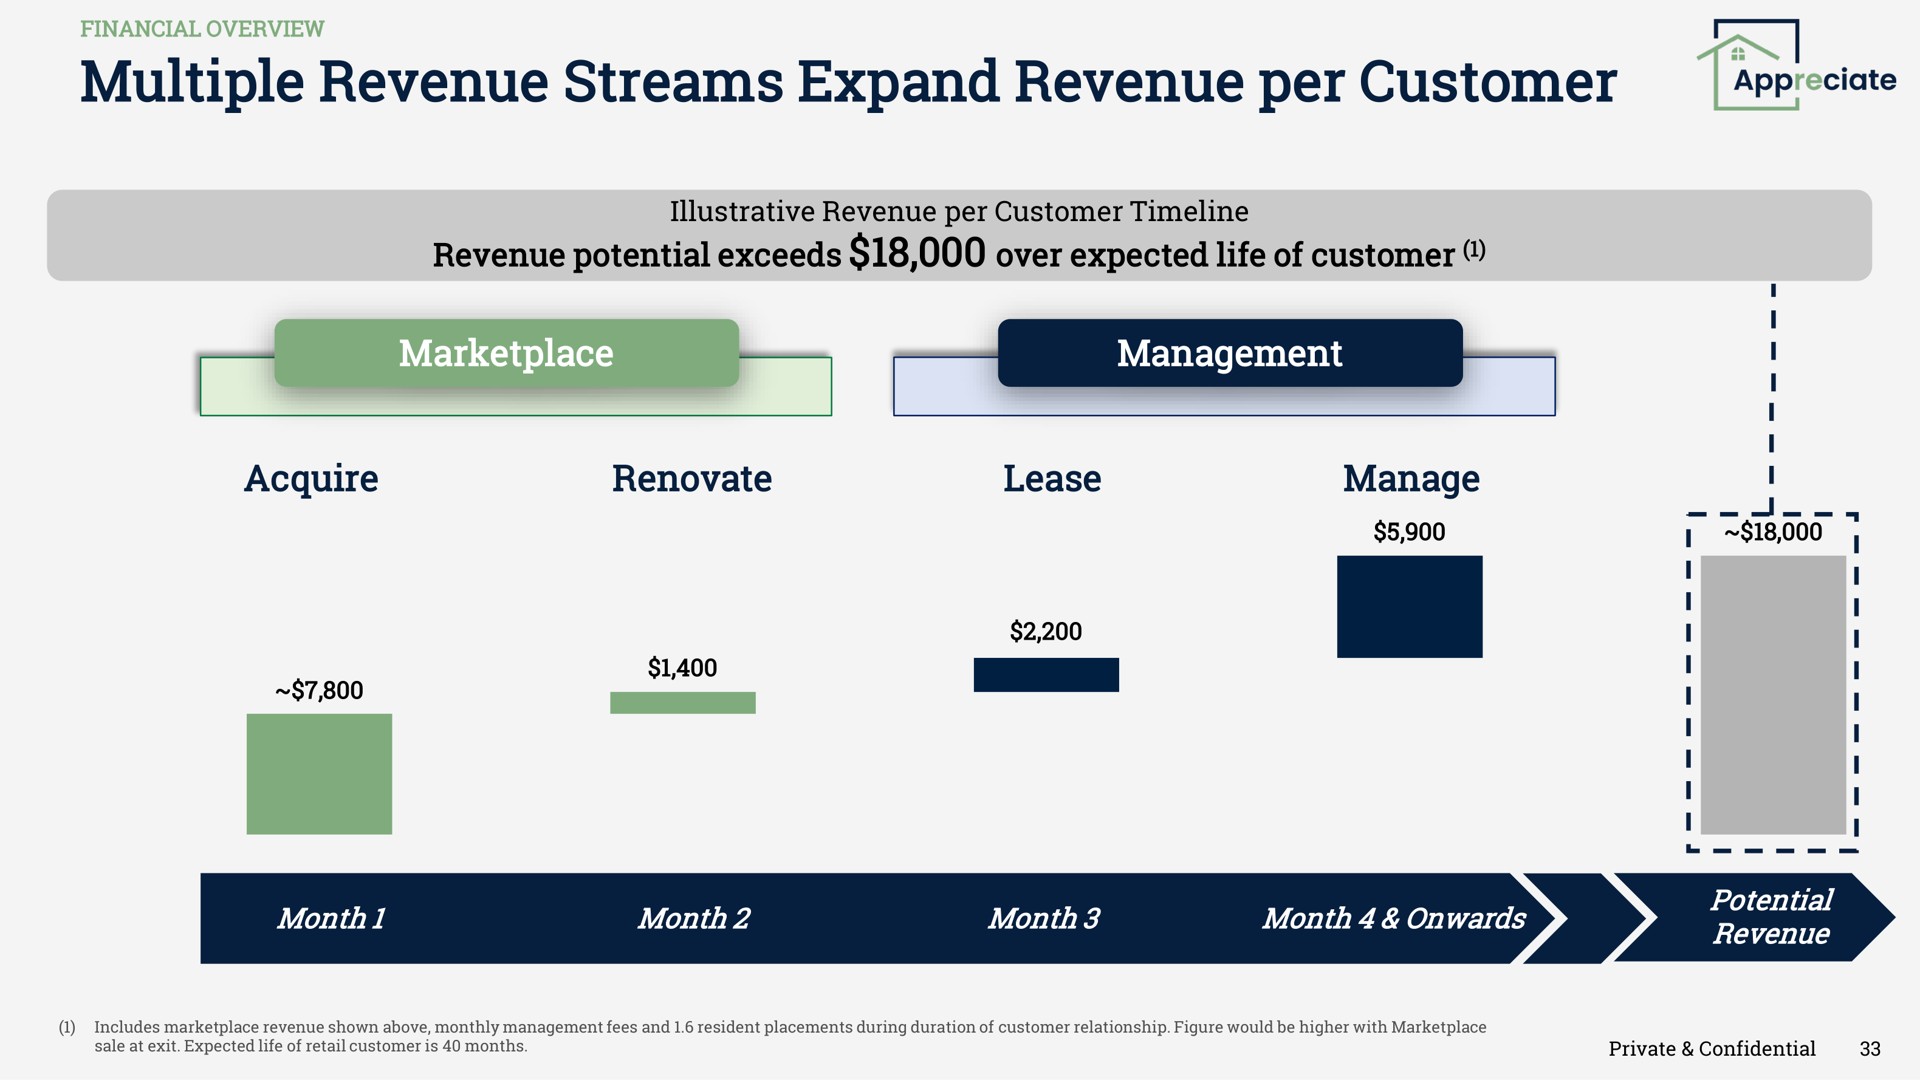 multiple revenue streams expand revenue per customer a | Appreciate